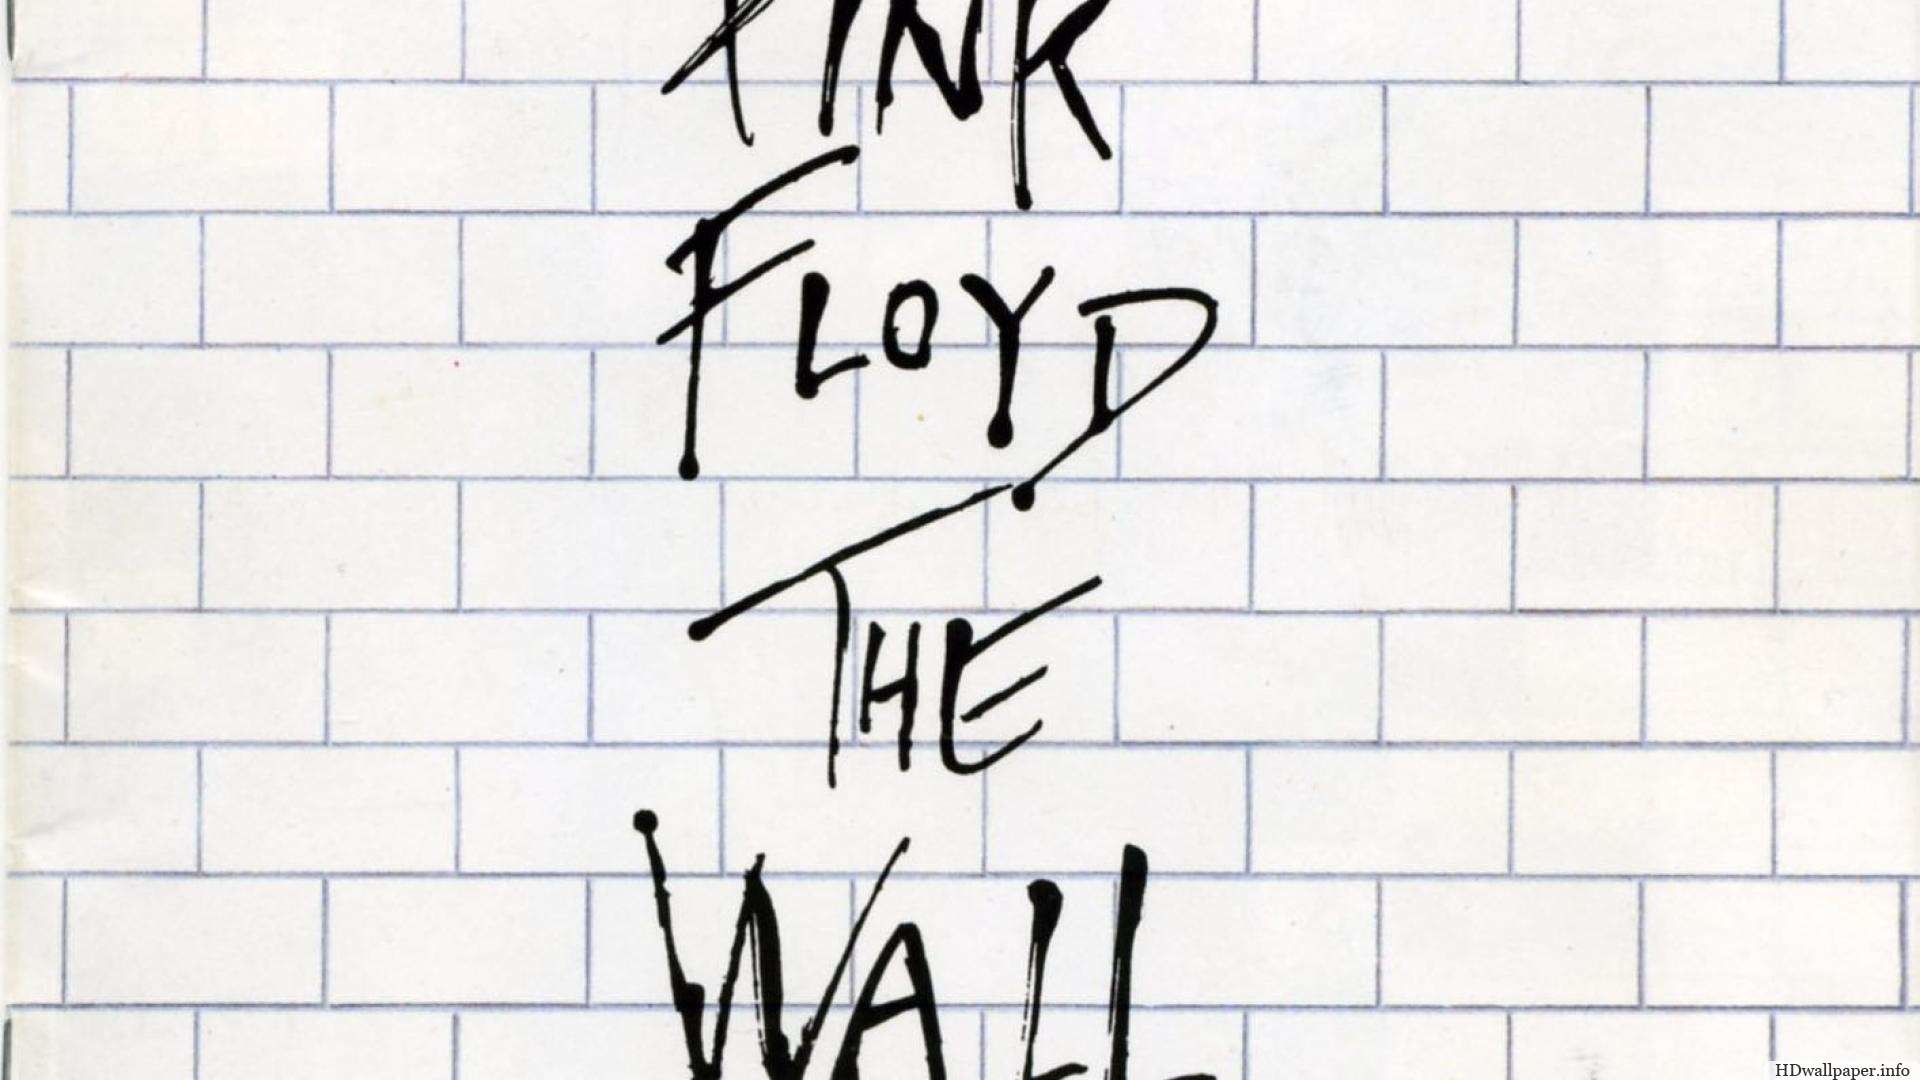 77 Pink Floyd The Wall Wallpaper  WallpaperSafari